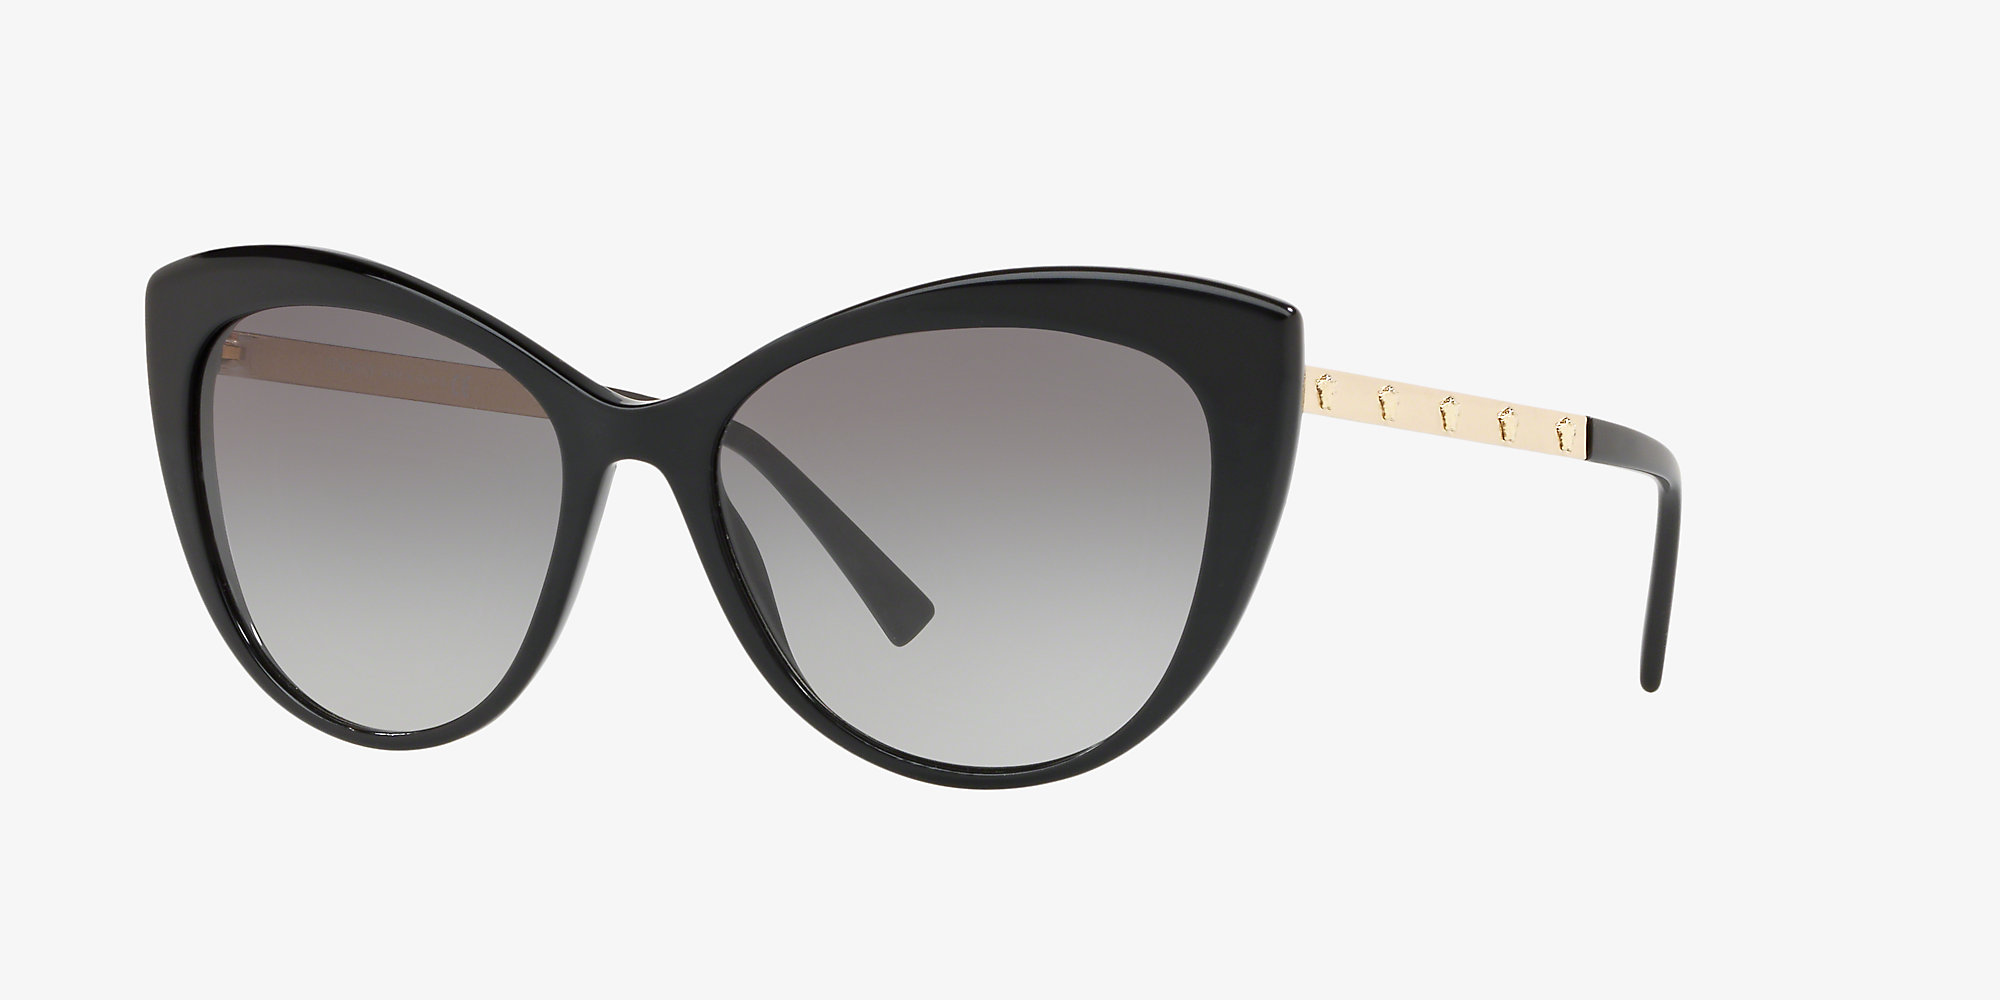 versace black cat eye sunglasses